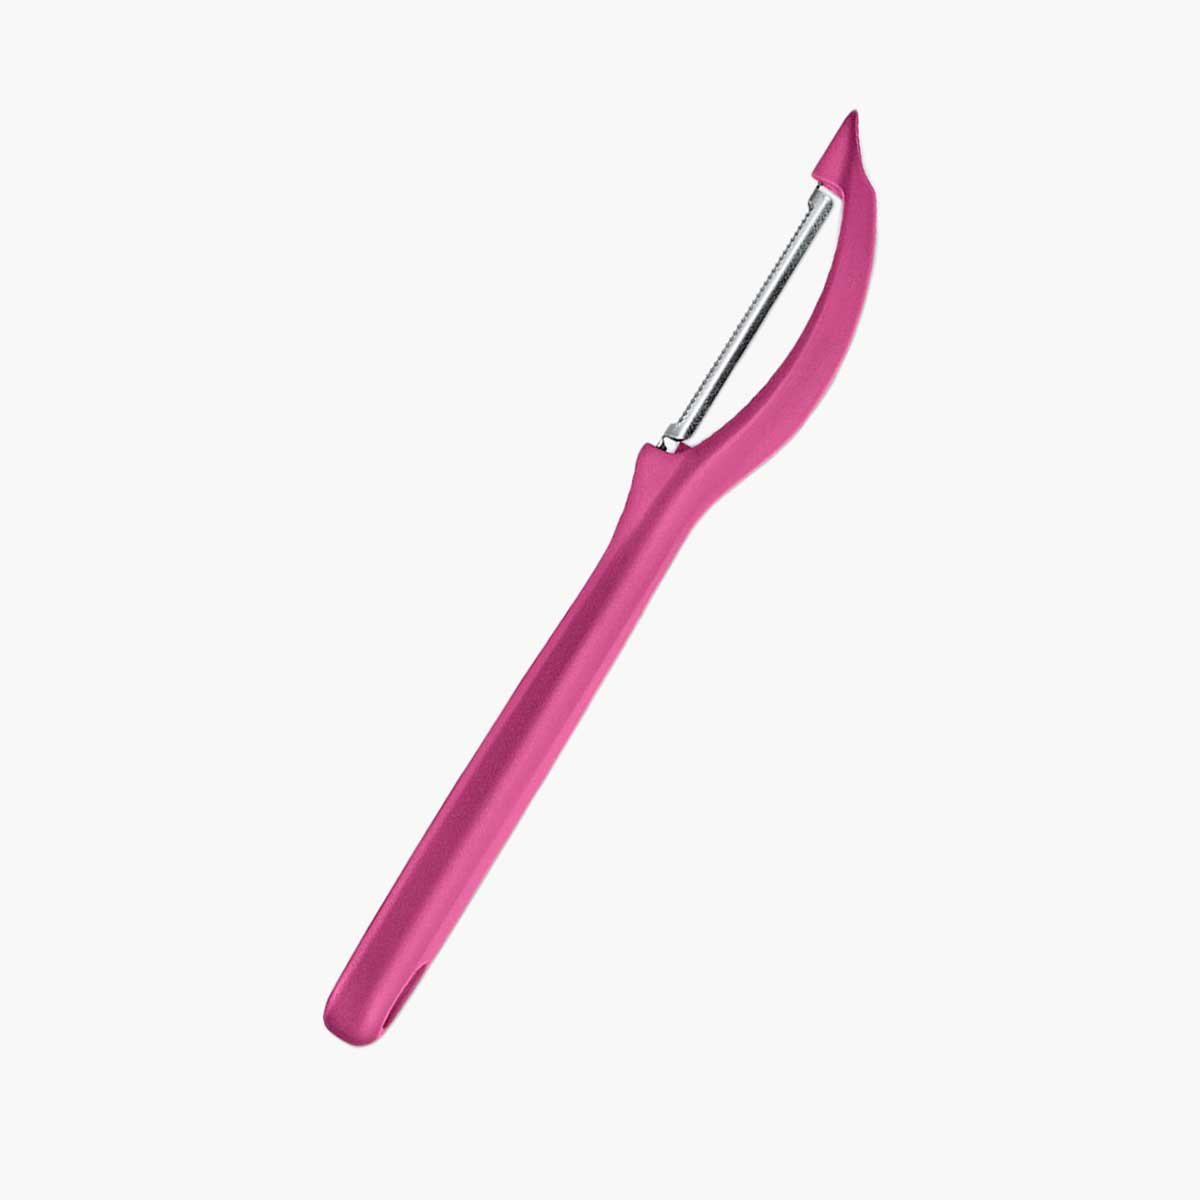 A pink Victorinox serrated peeler.